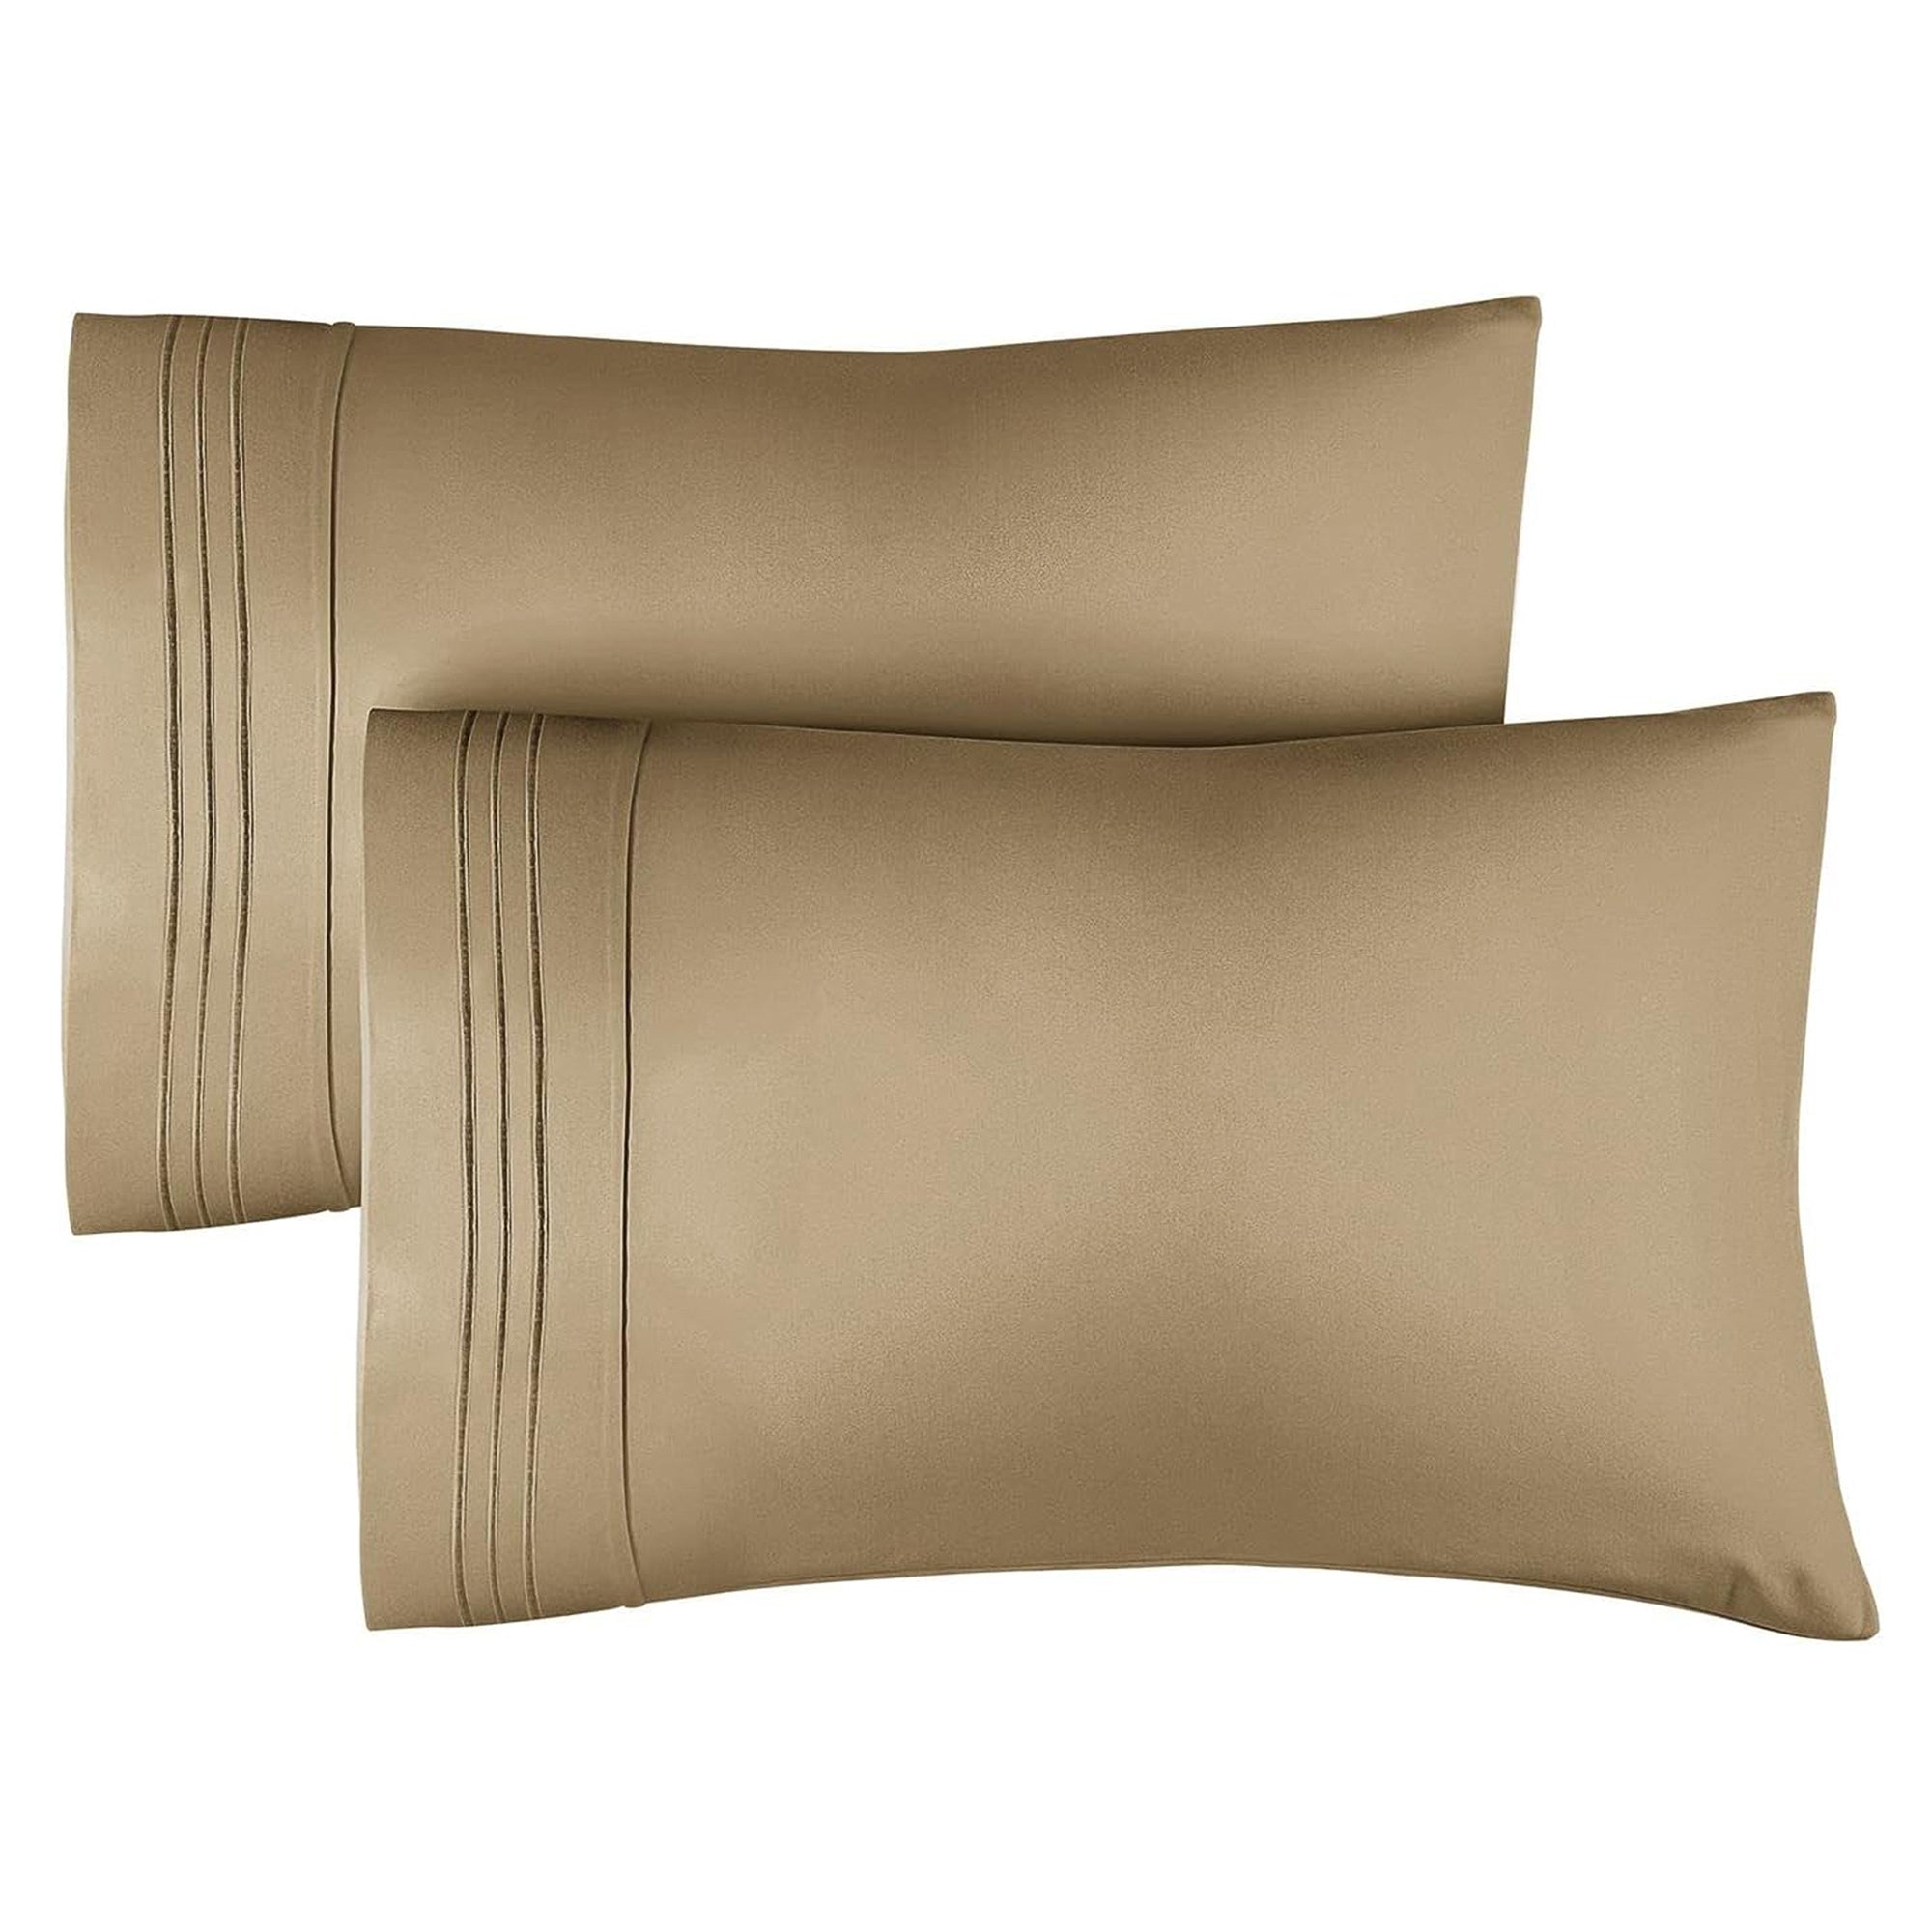 2 Pillowcase Set - Beige